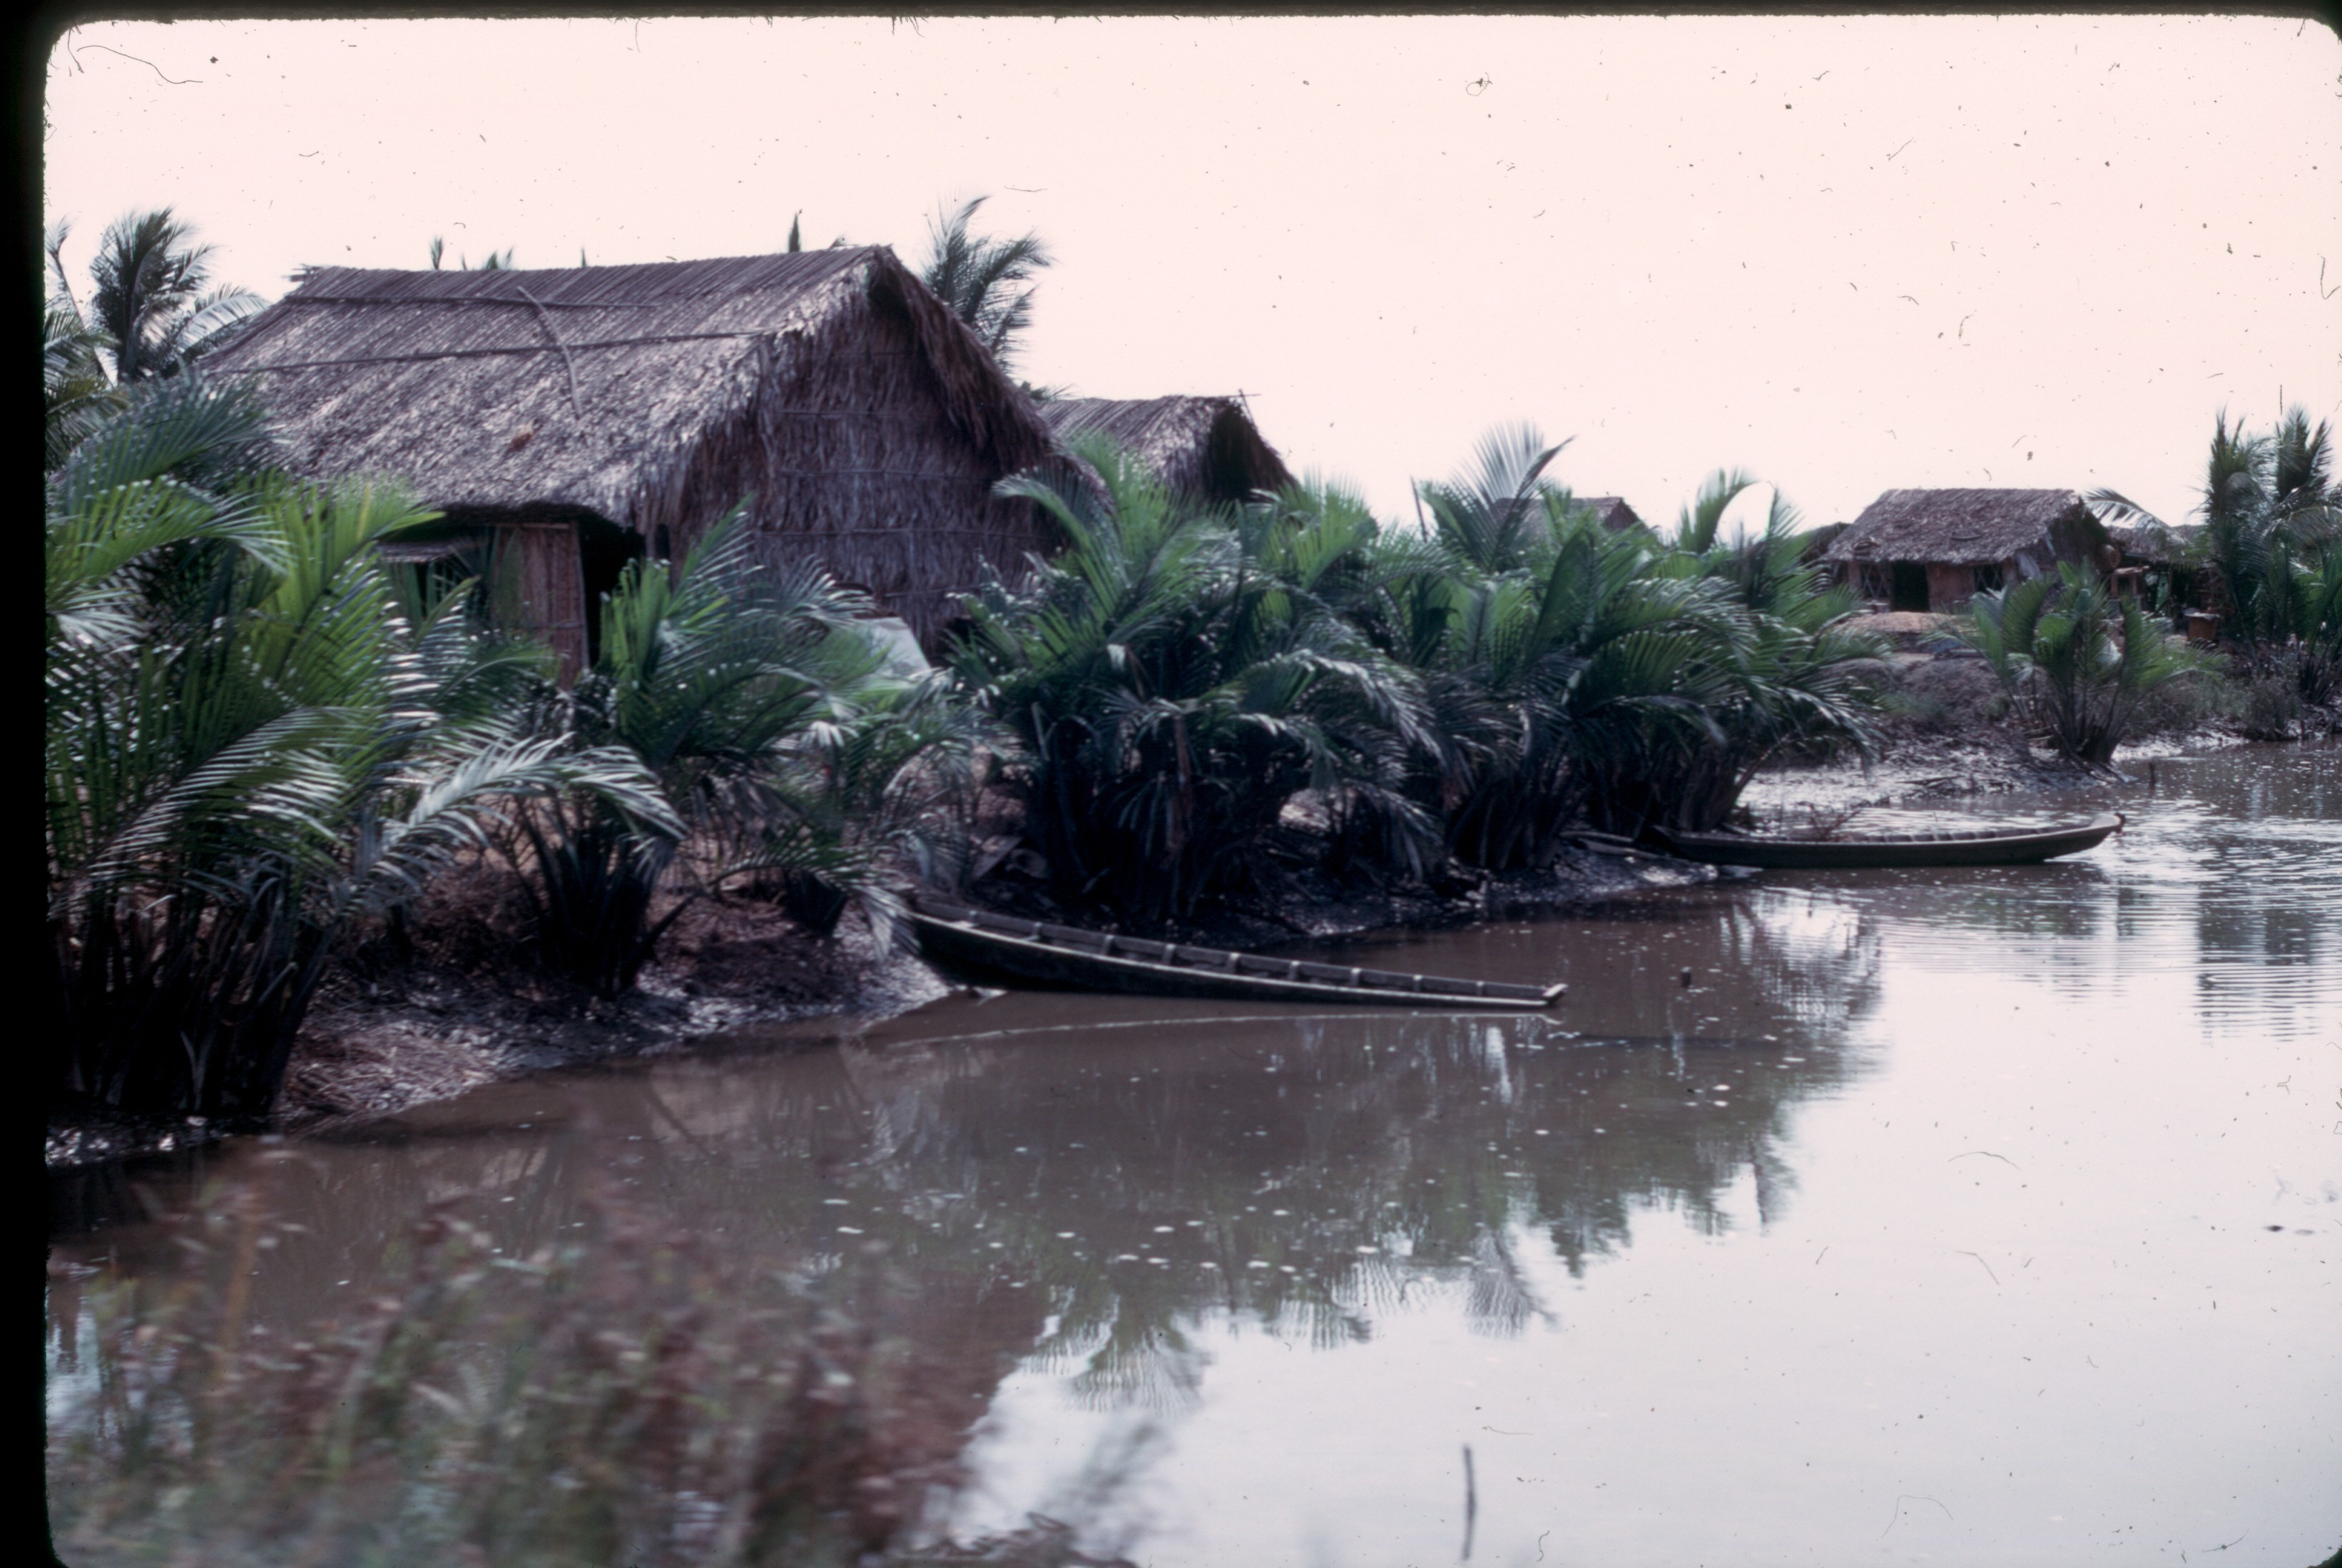 ss 033 1970 02 22 near saigon waterway and houses